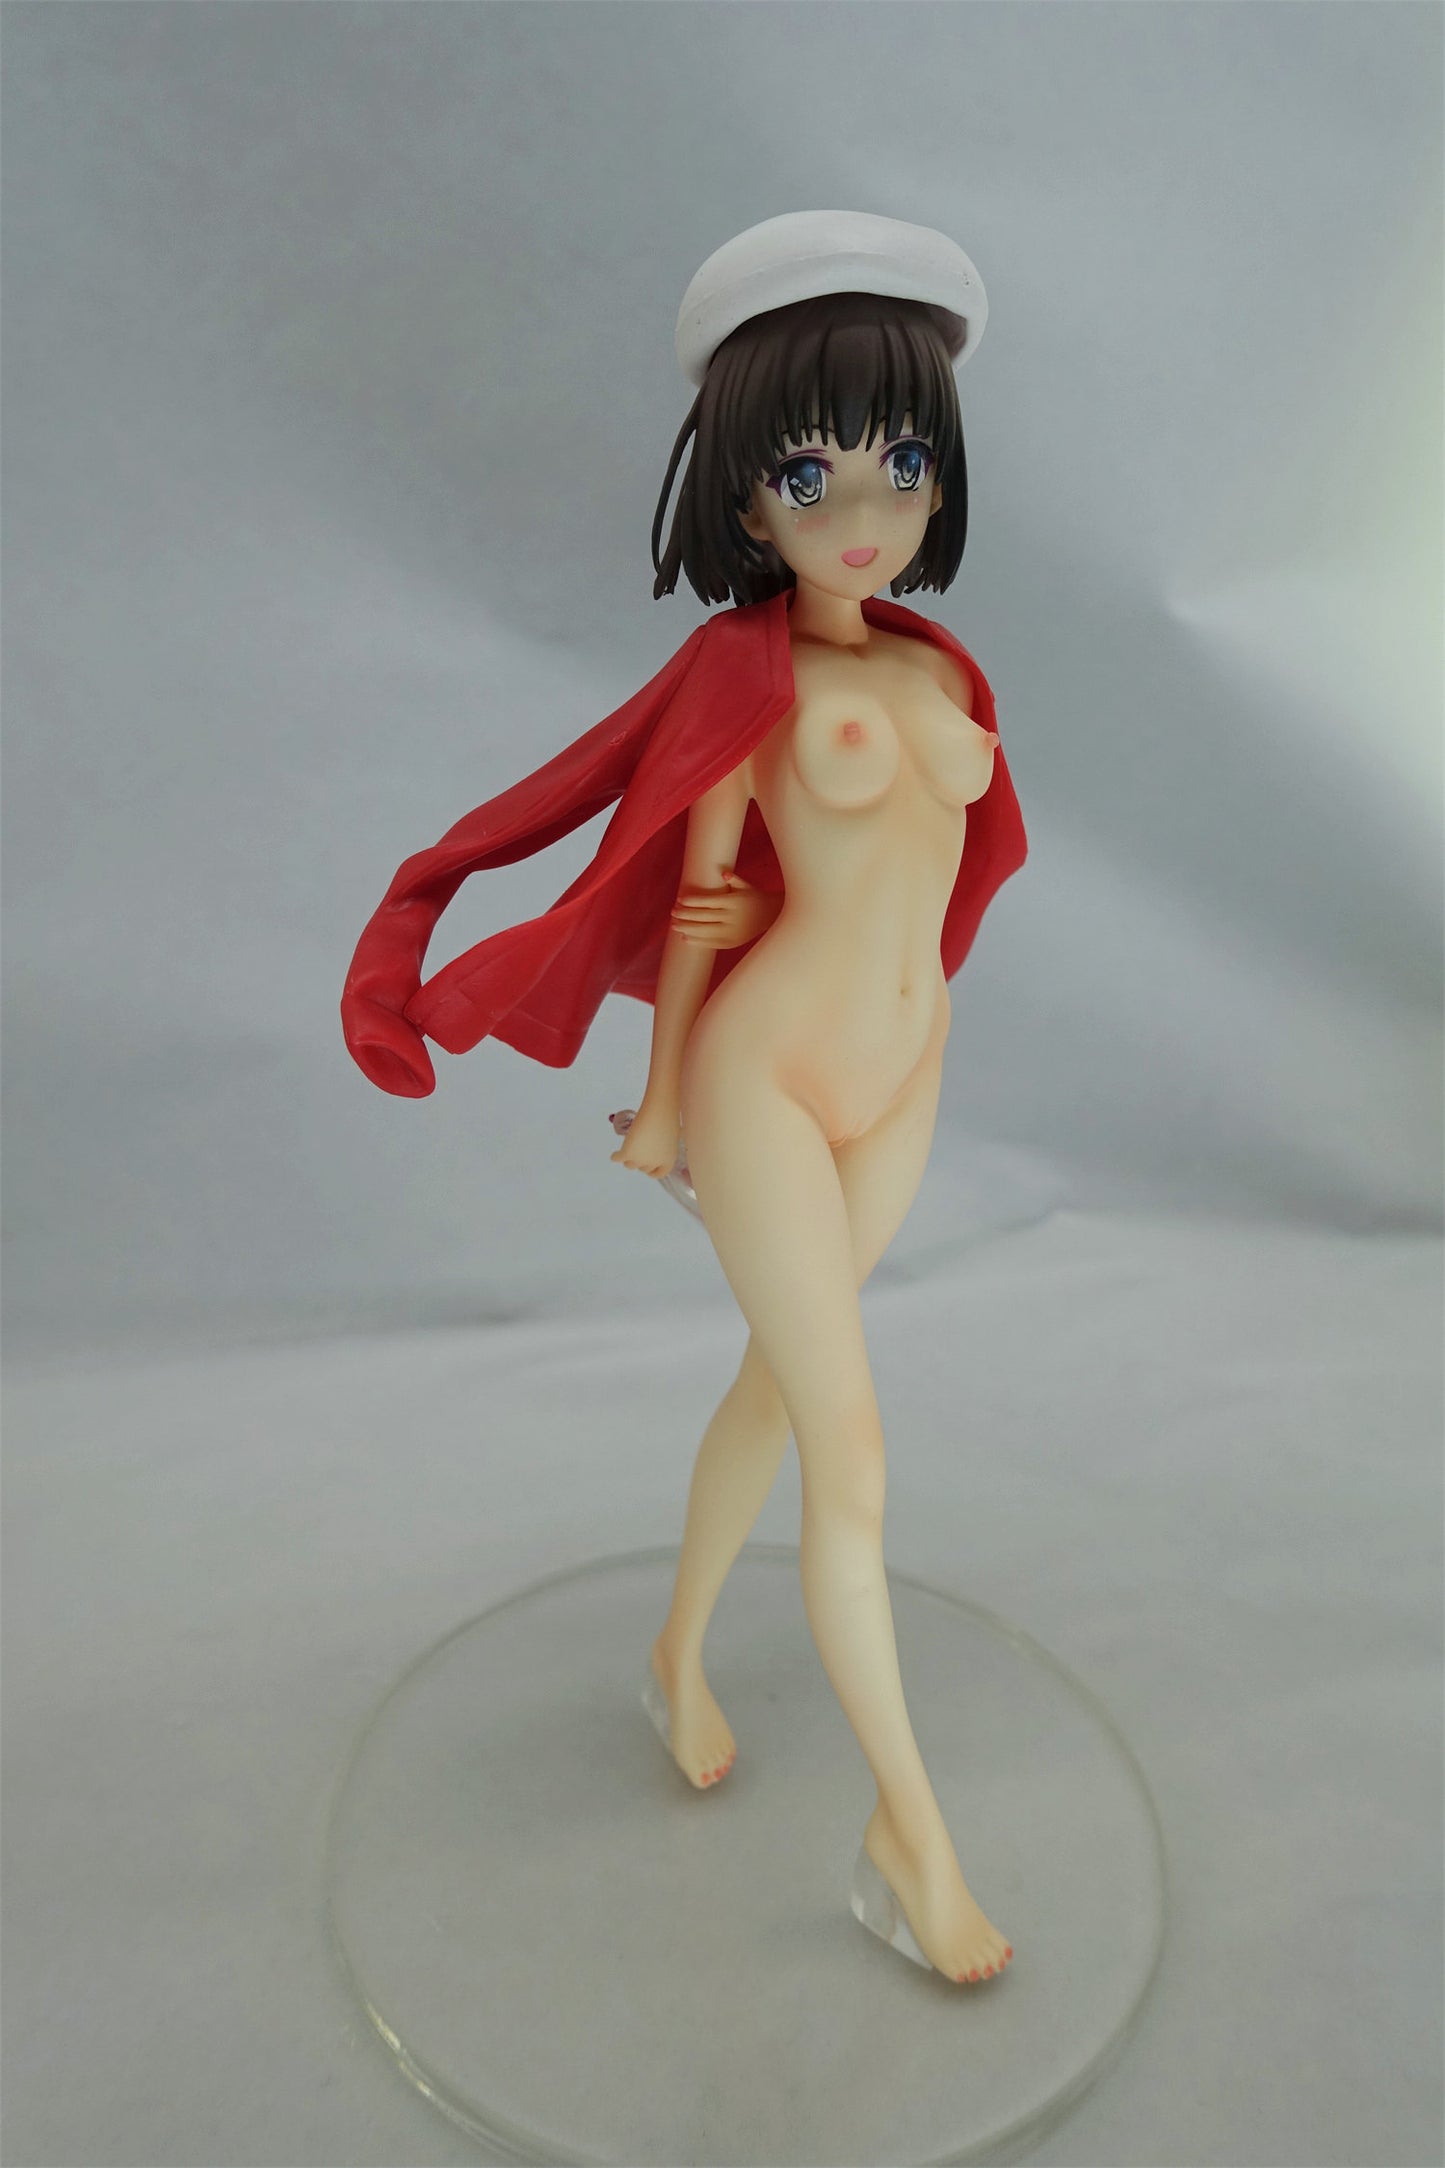 Saekano Megumi Kato 1/6 naked anime figures